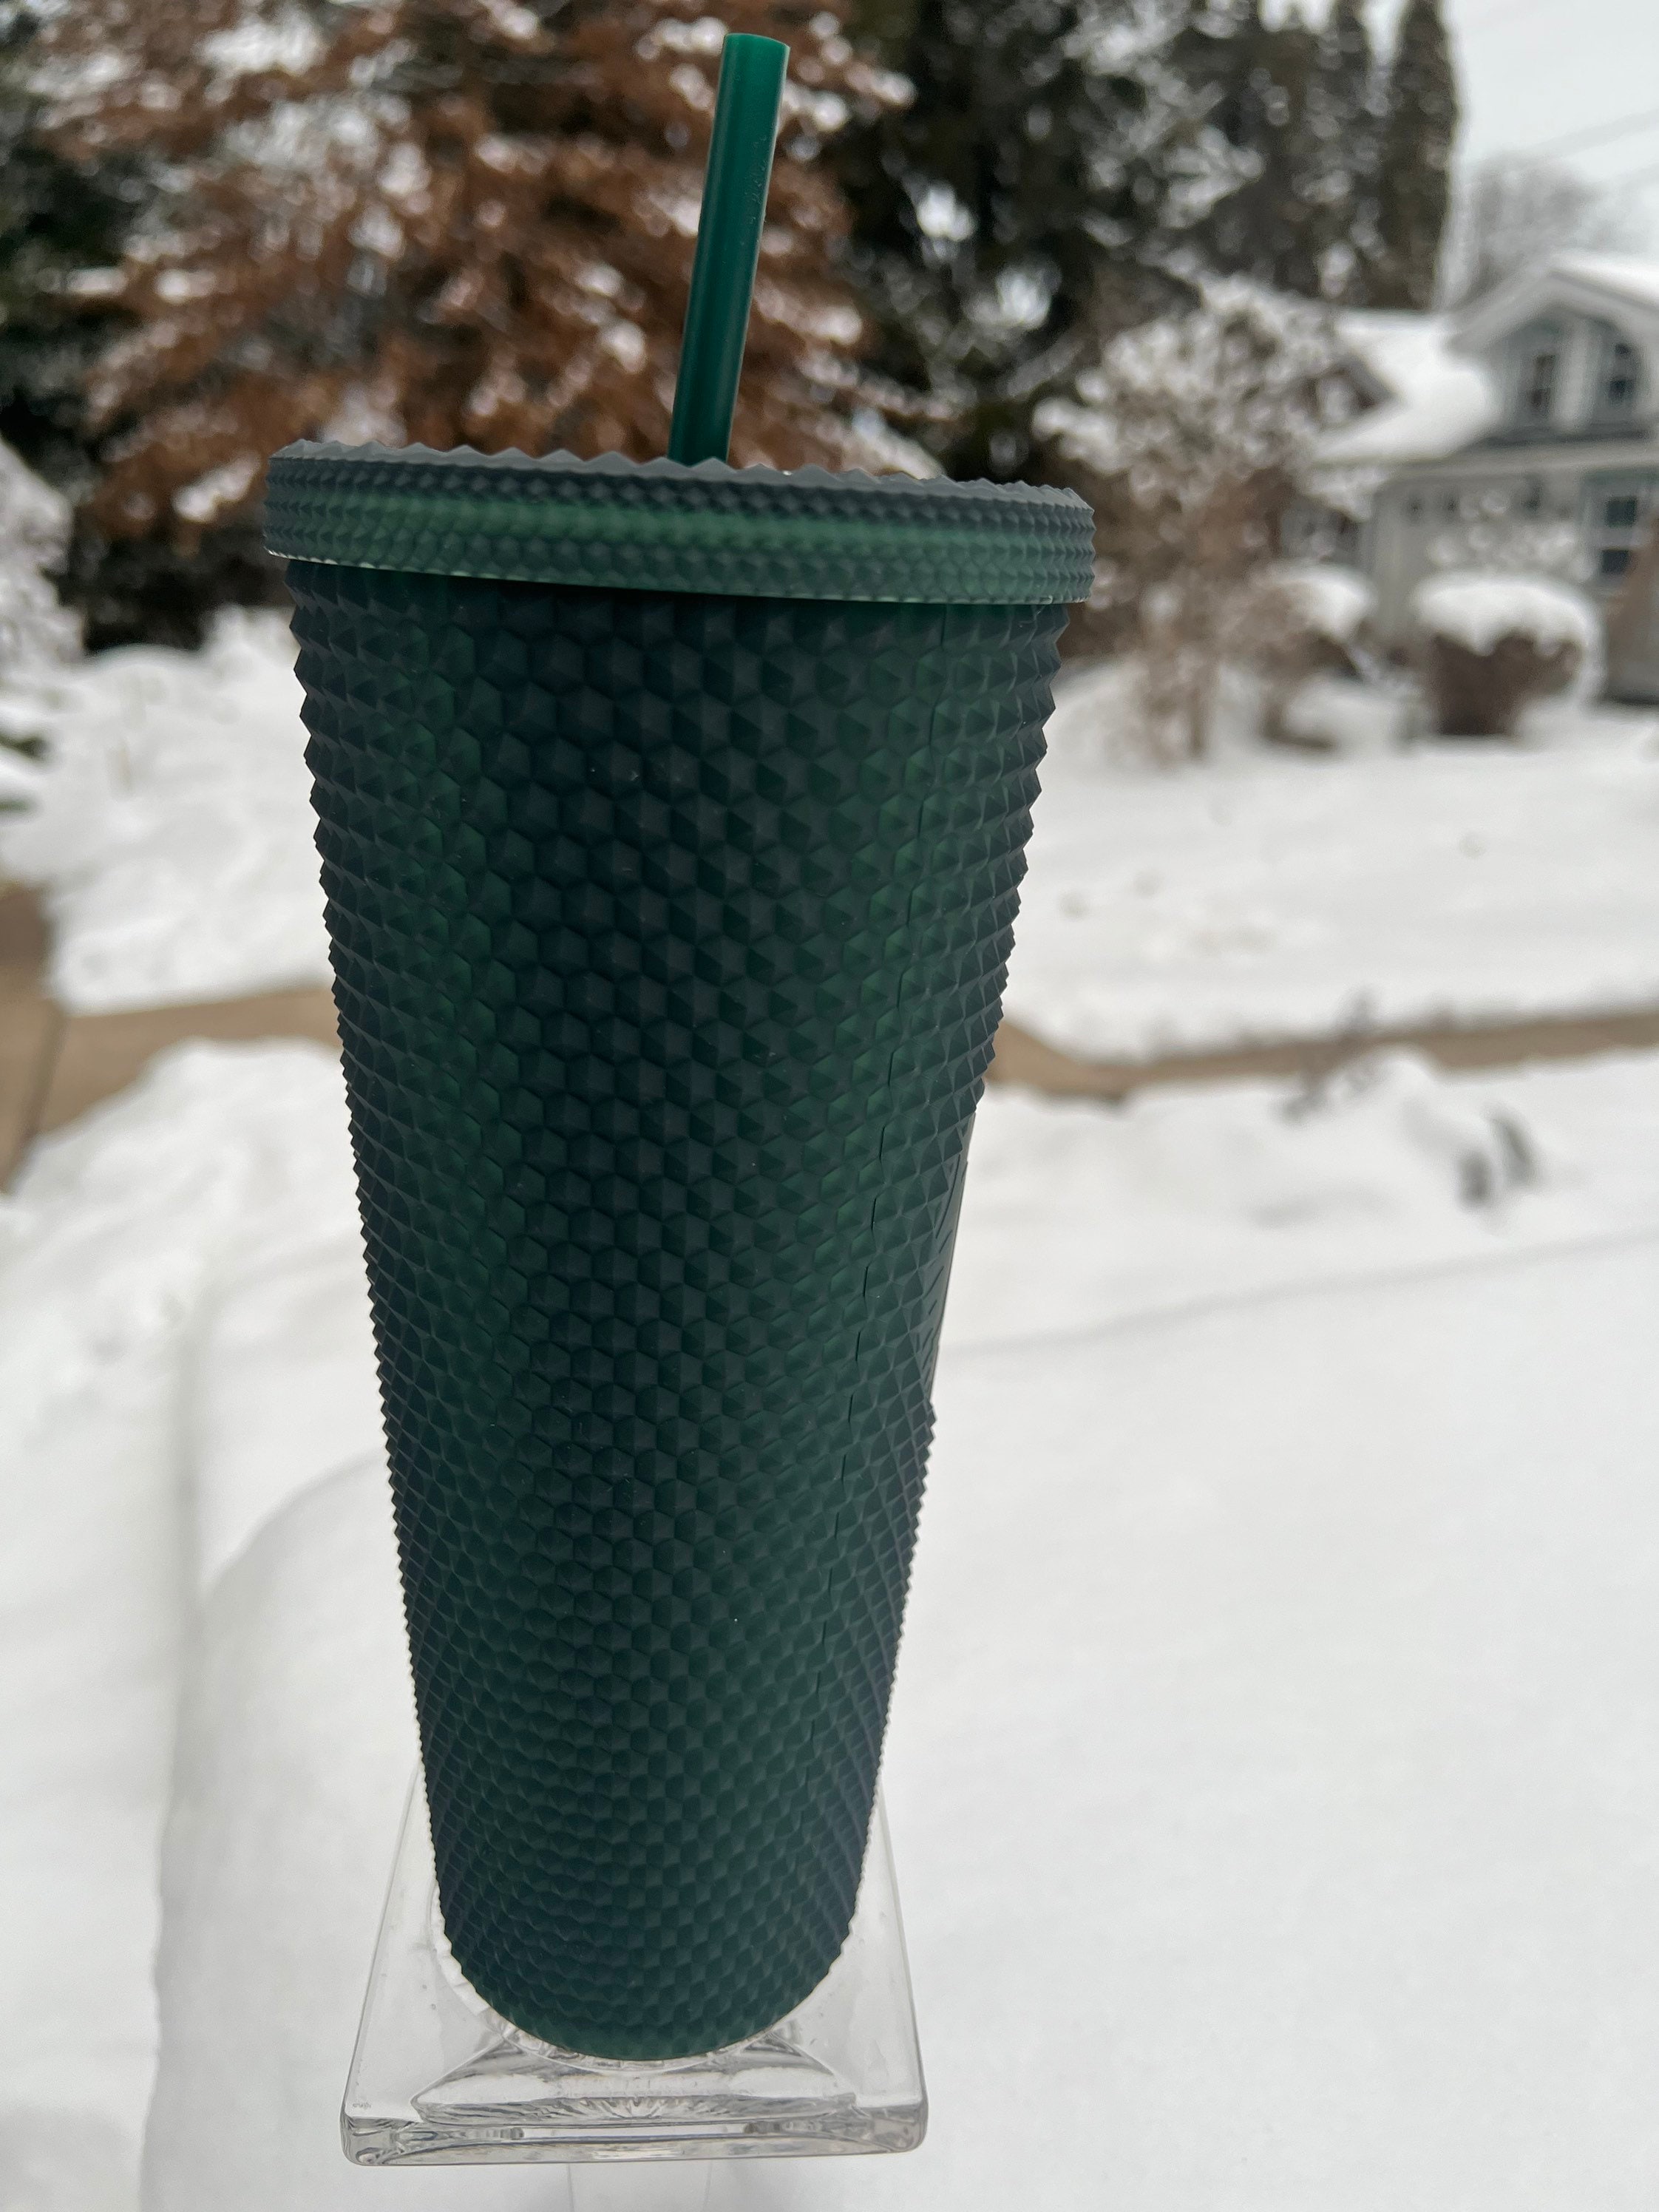 Starbucks Tumbler Cup Dark Green 550ml for Coffee Tea etc. — DimlingCo